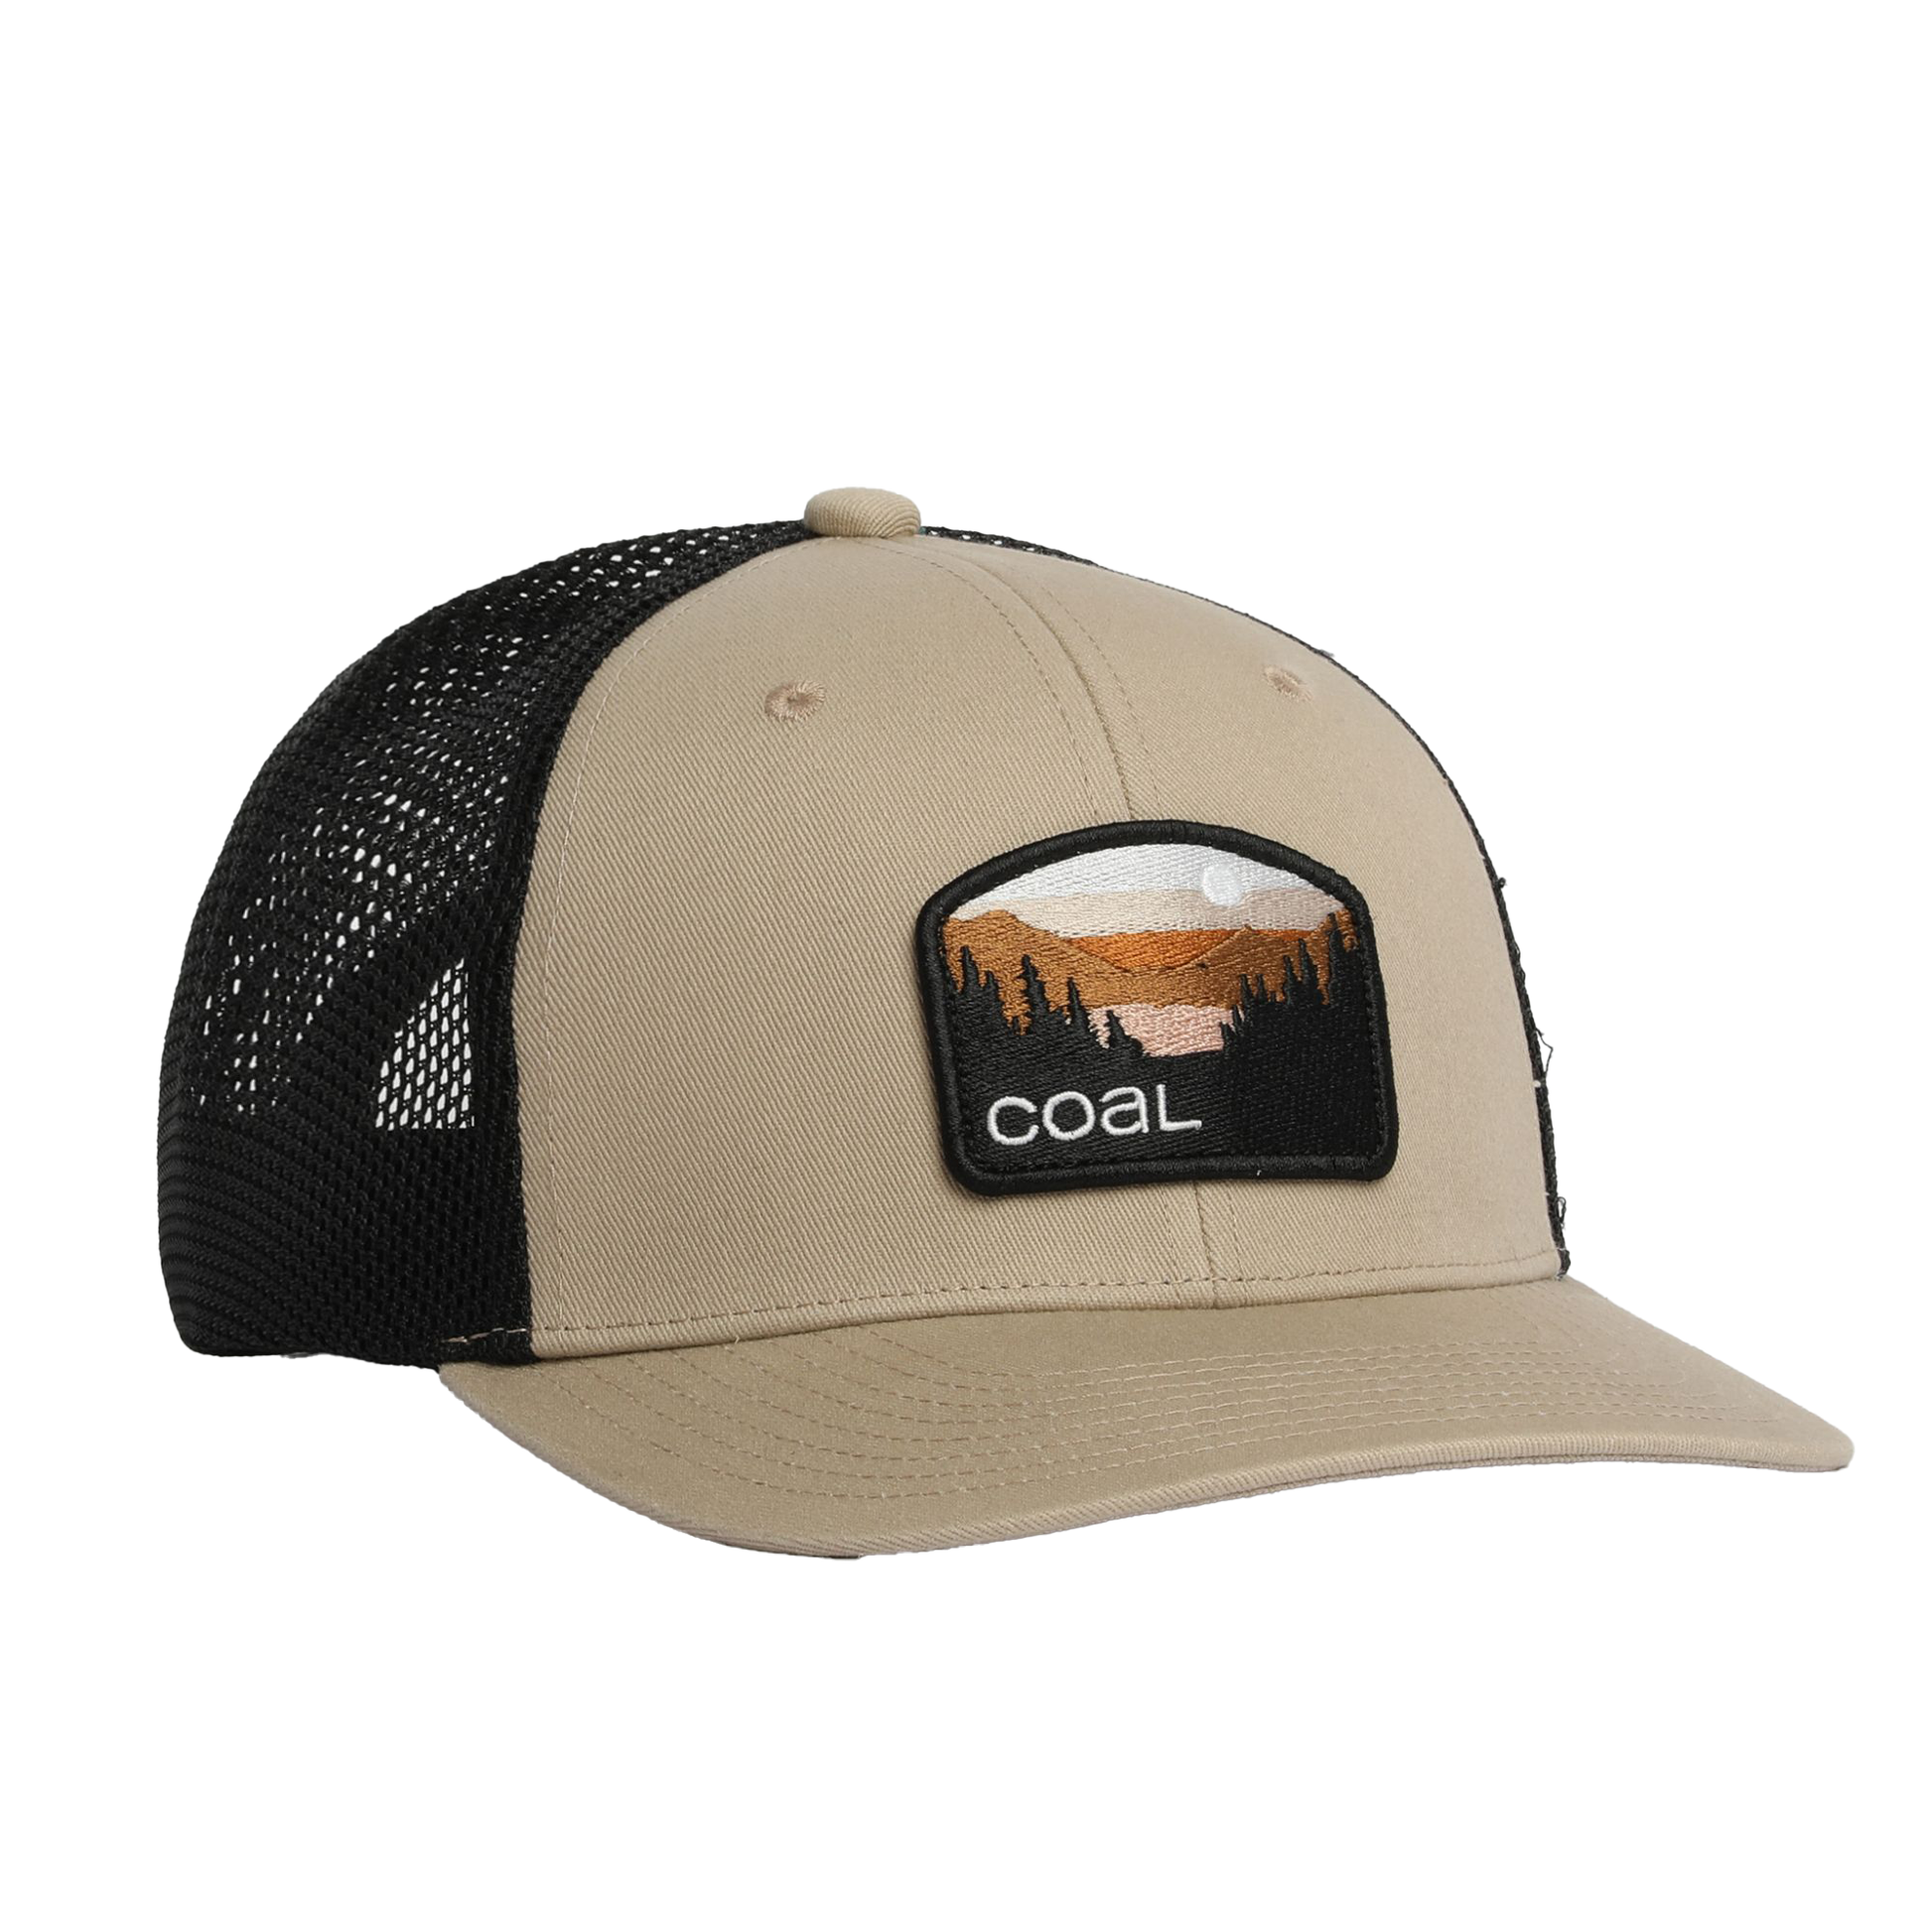 Coal Hauler One Low Hat Khaki OS Hats